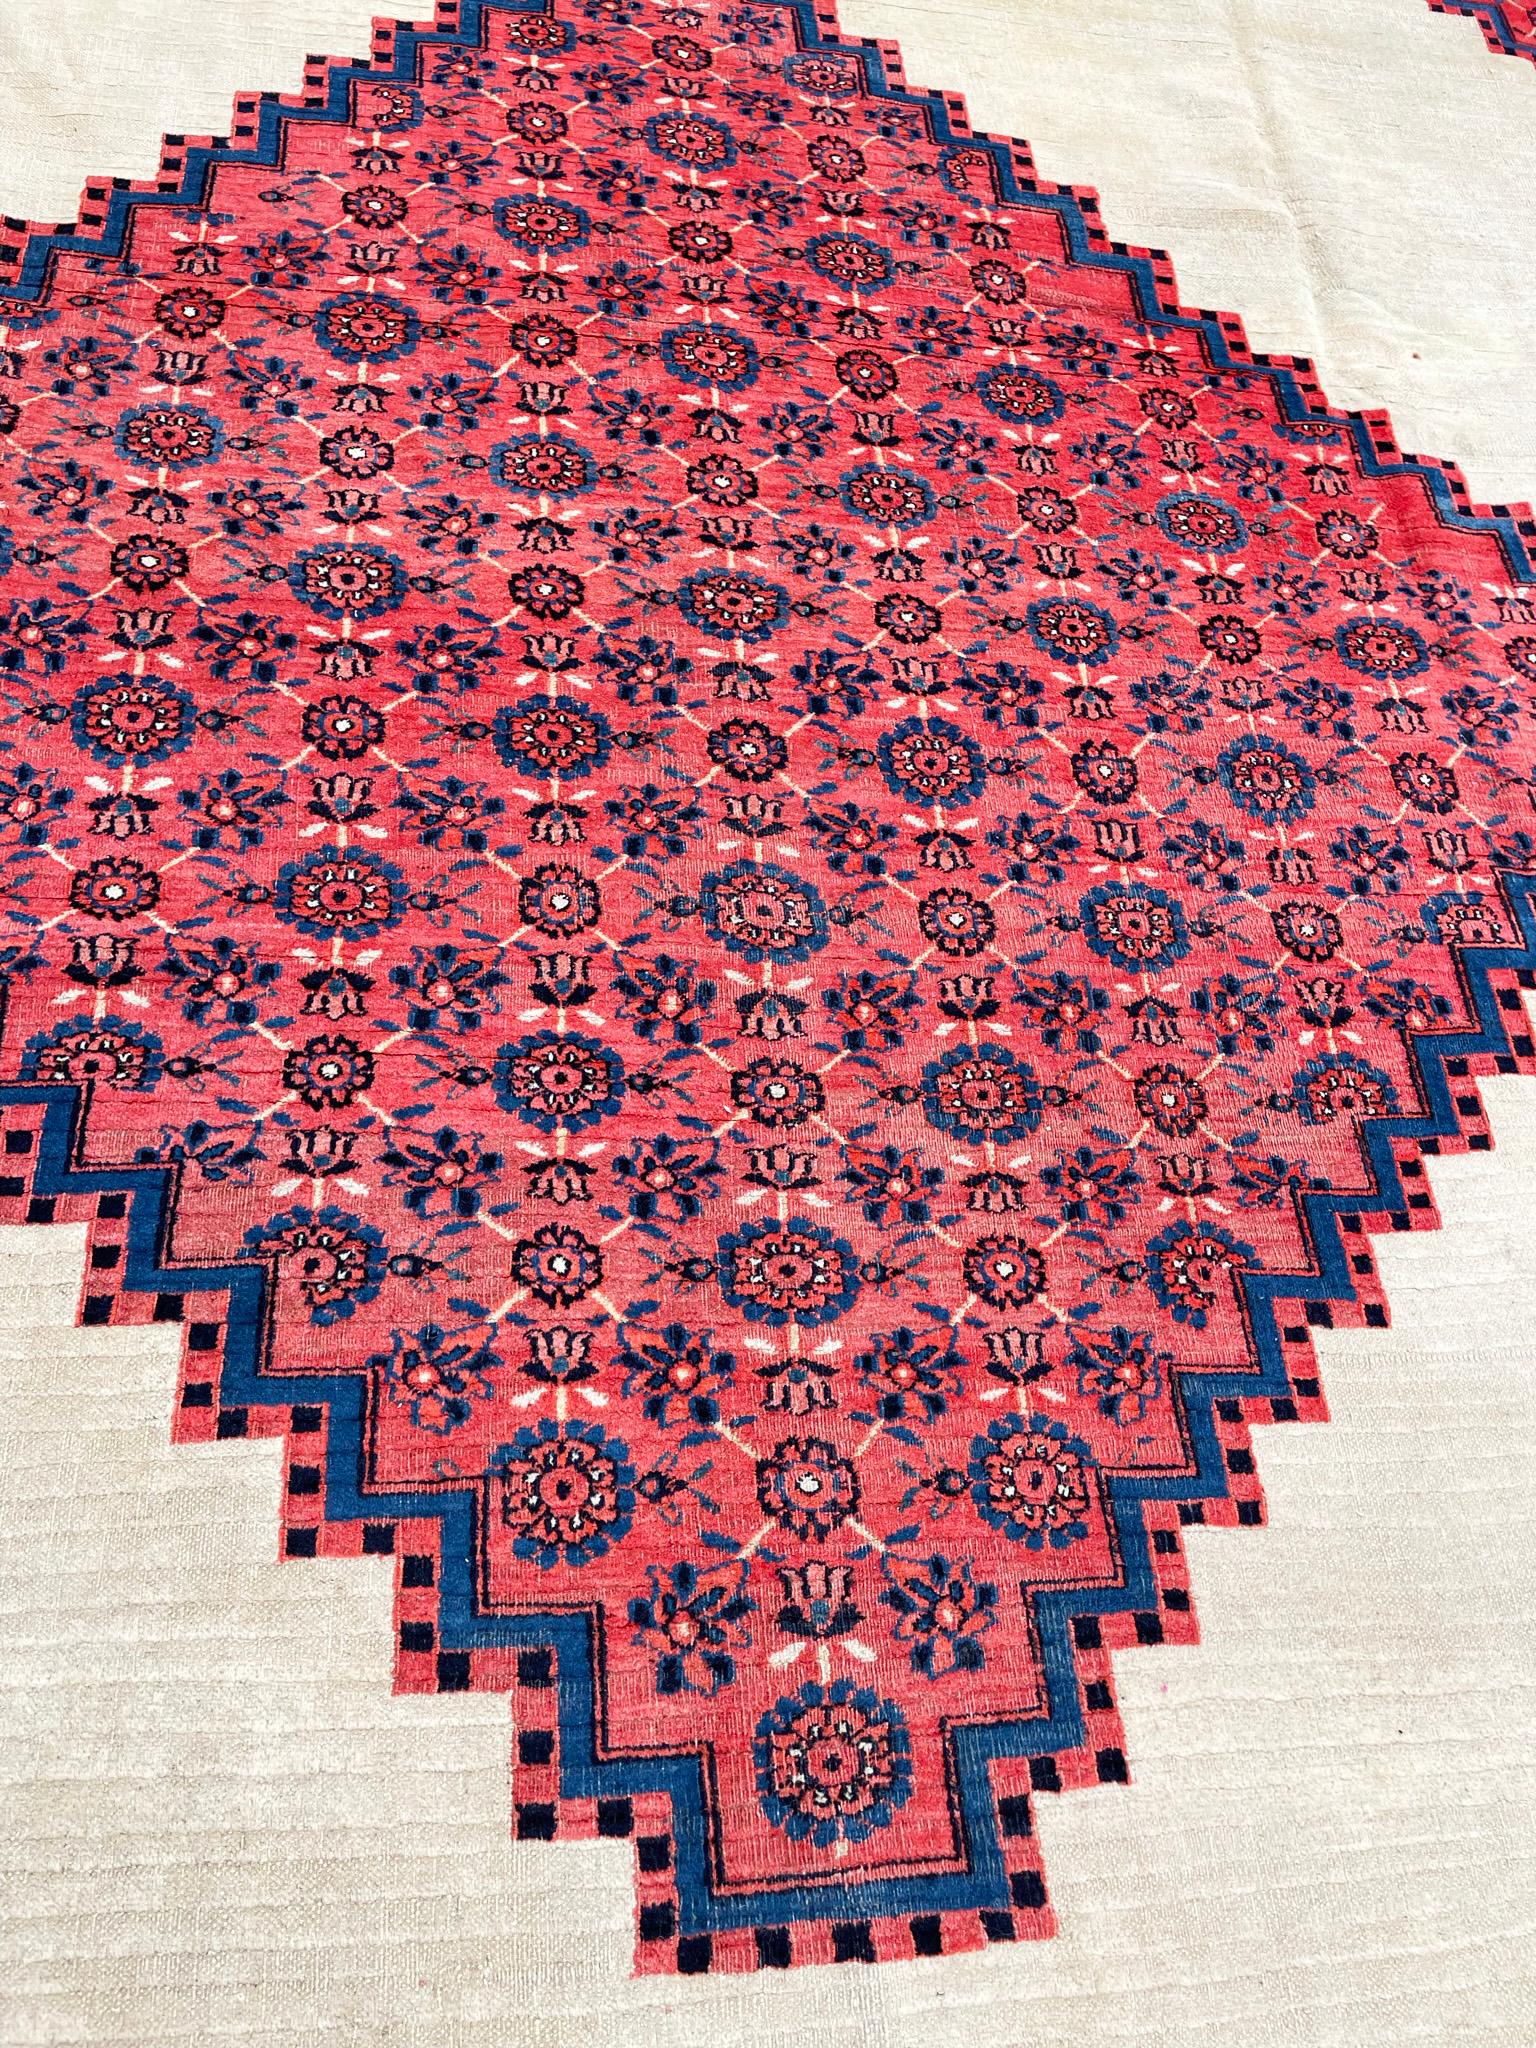 19th Century Antique Persian Dorosch/ Serapi Design Carpet For Sale